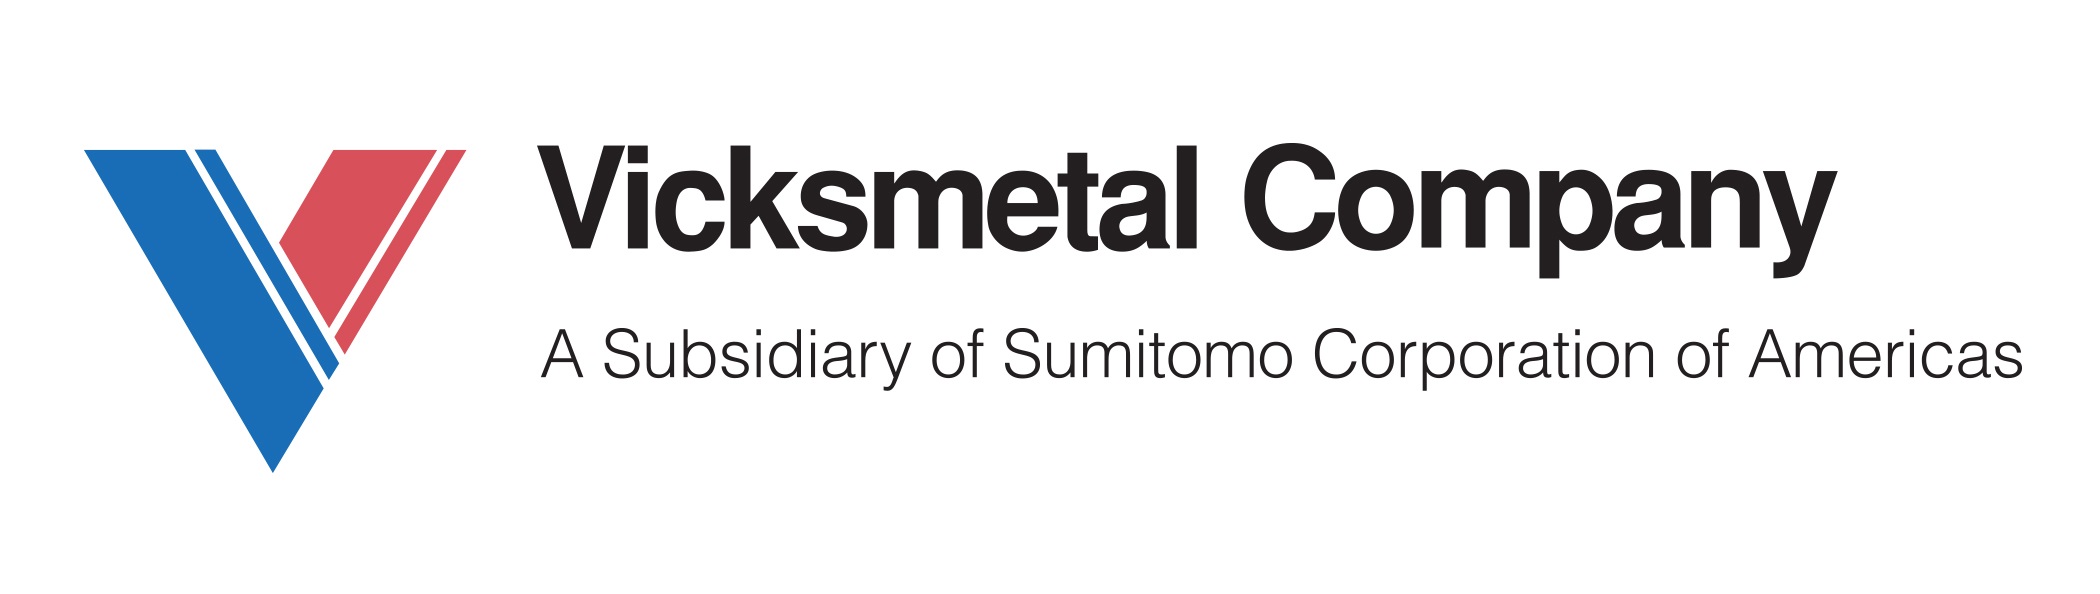 Vicksmetal_One_Line_Subsidiary_Logo_July2015 (2).jpg